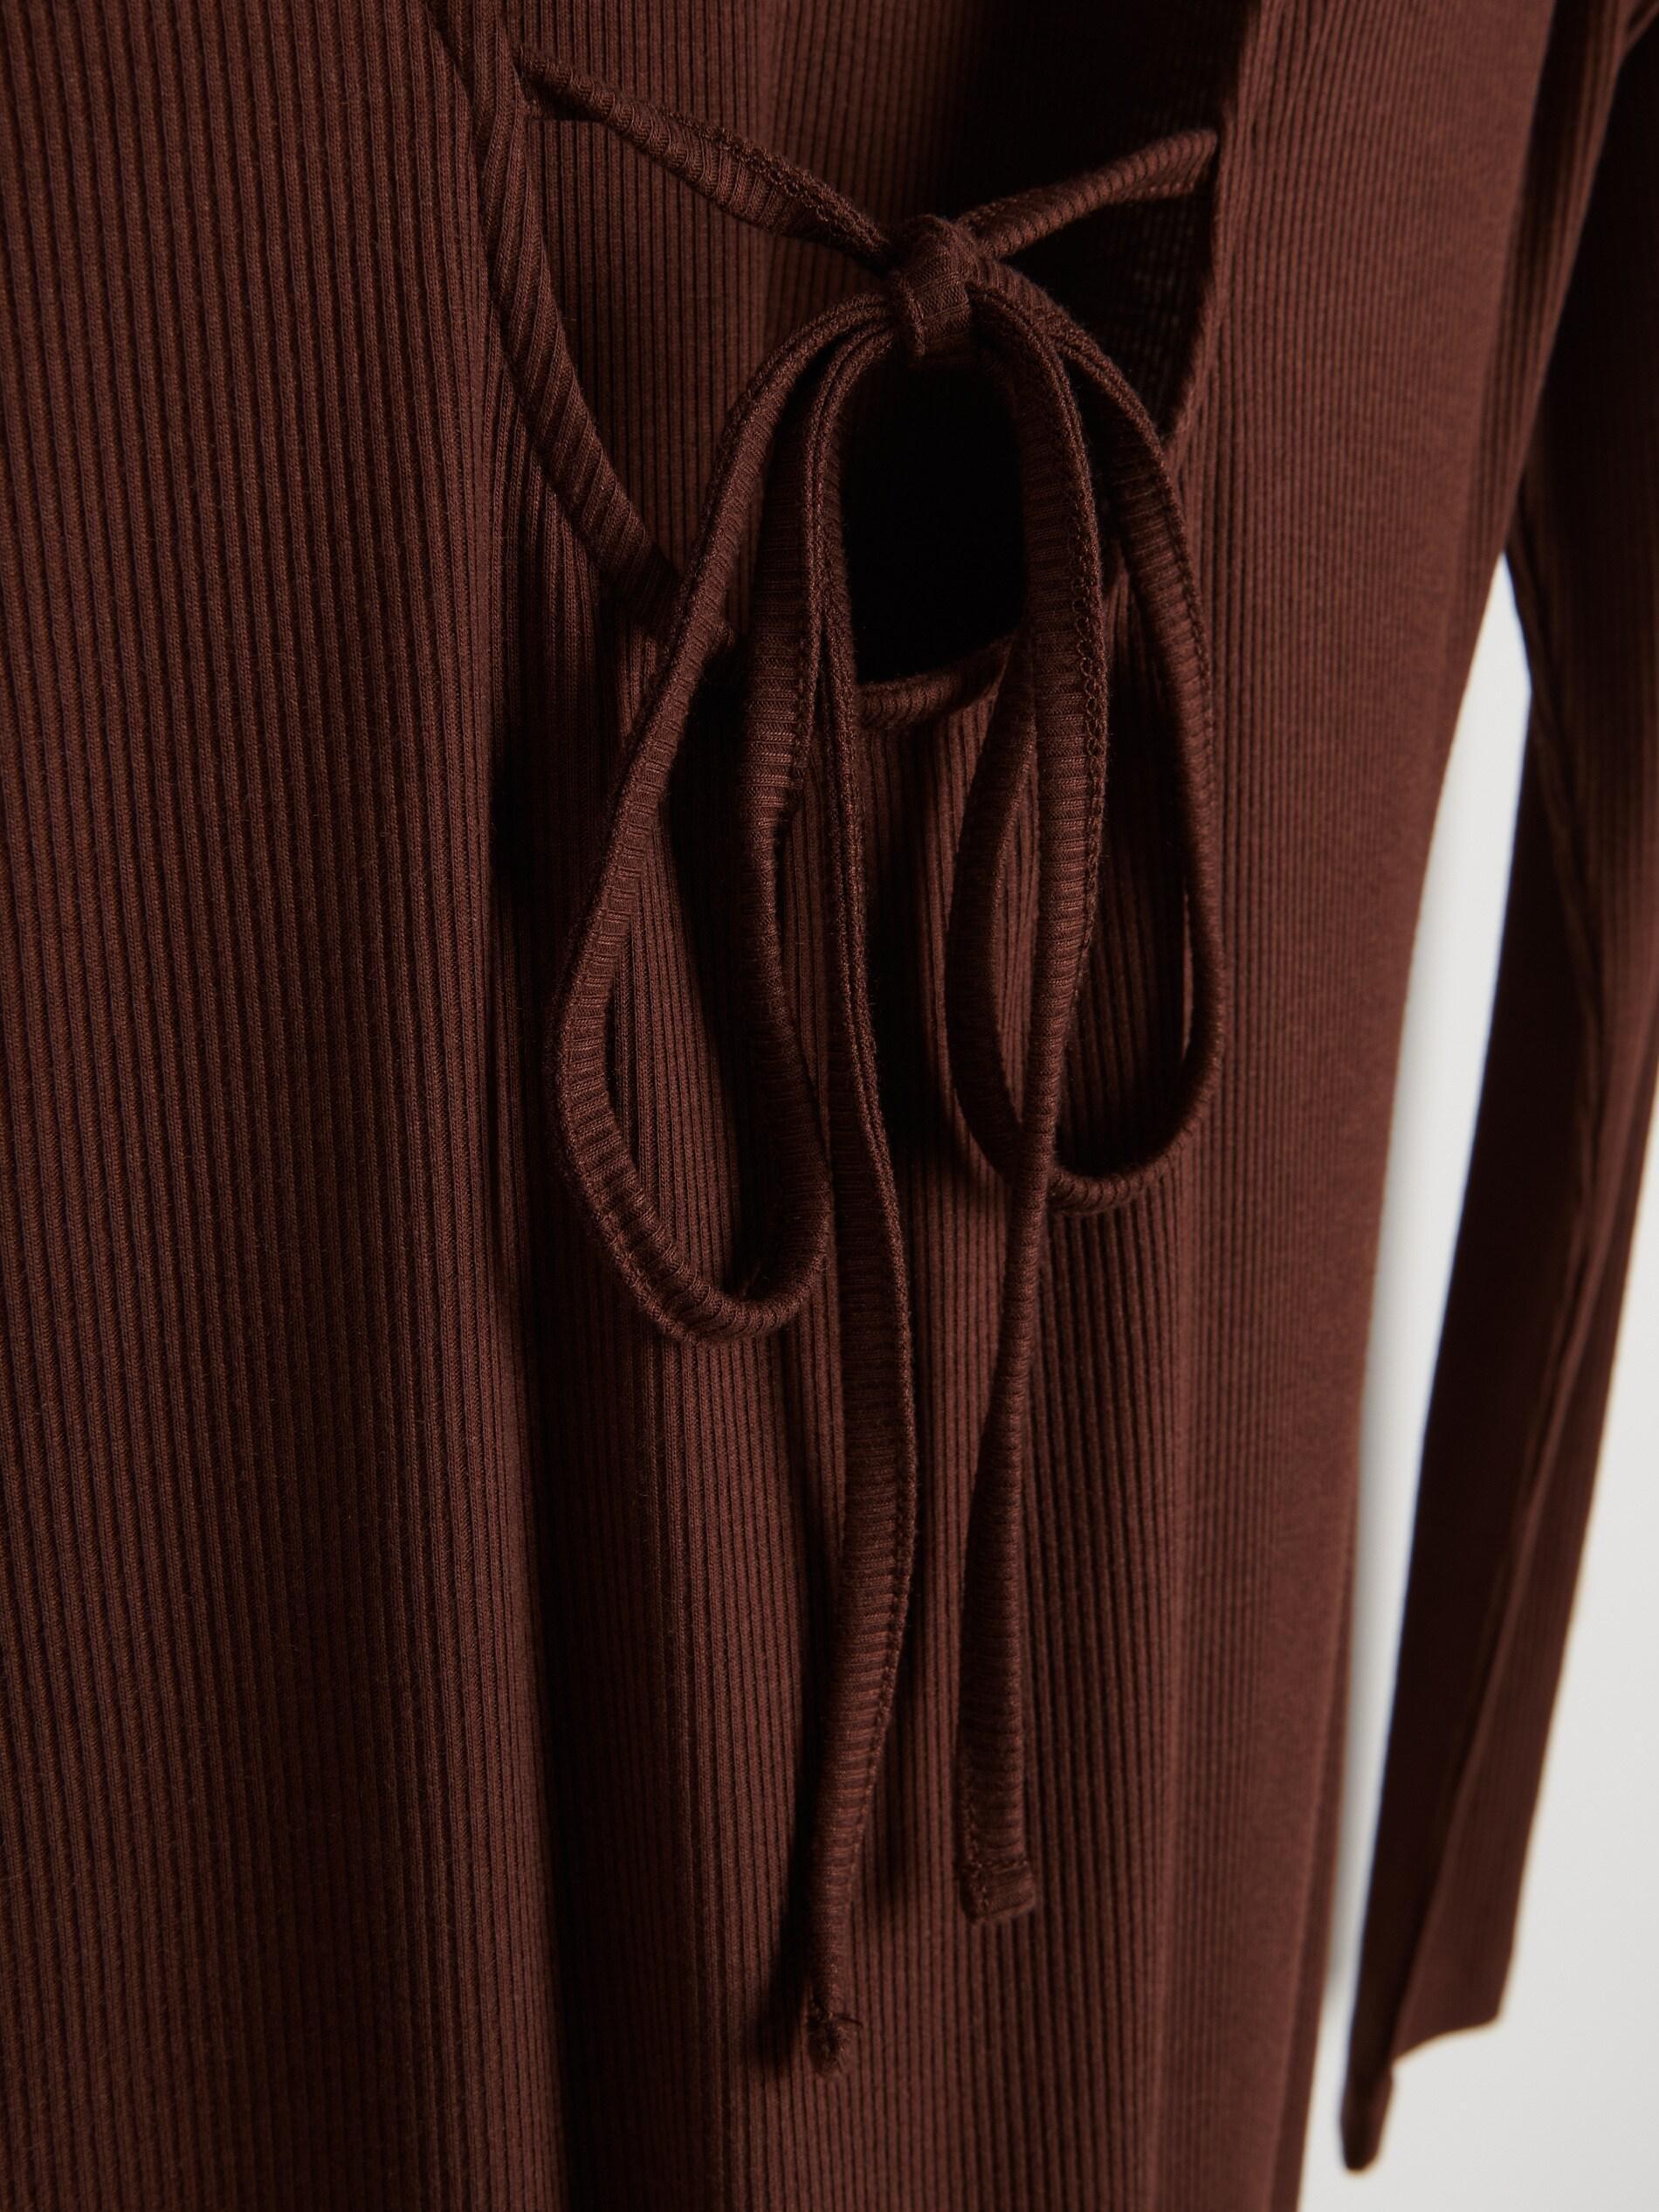 Reserved - Dark Brown Jersey Dress, Women